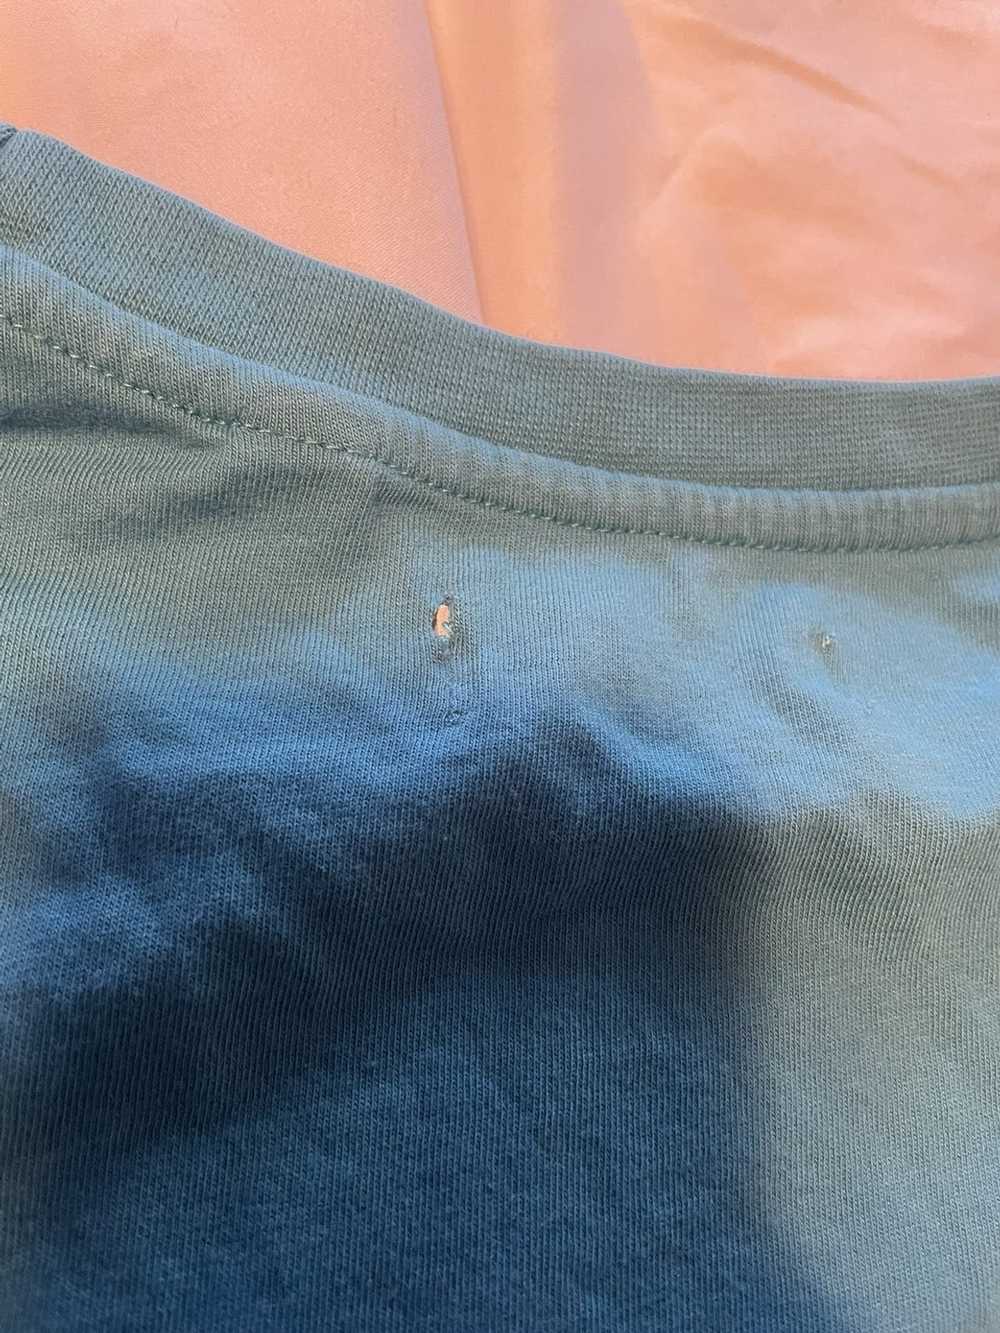 Pacsun Long Sleeve Rocky Mountain T-Shirt - image 4